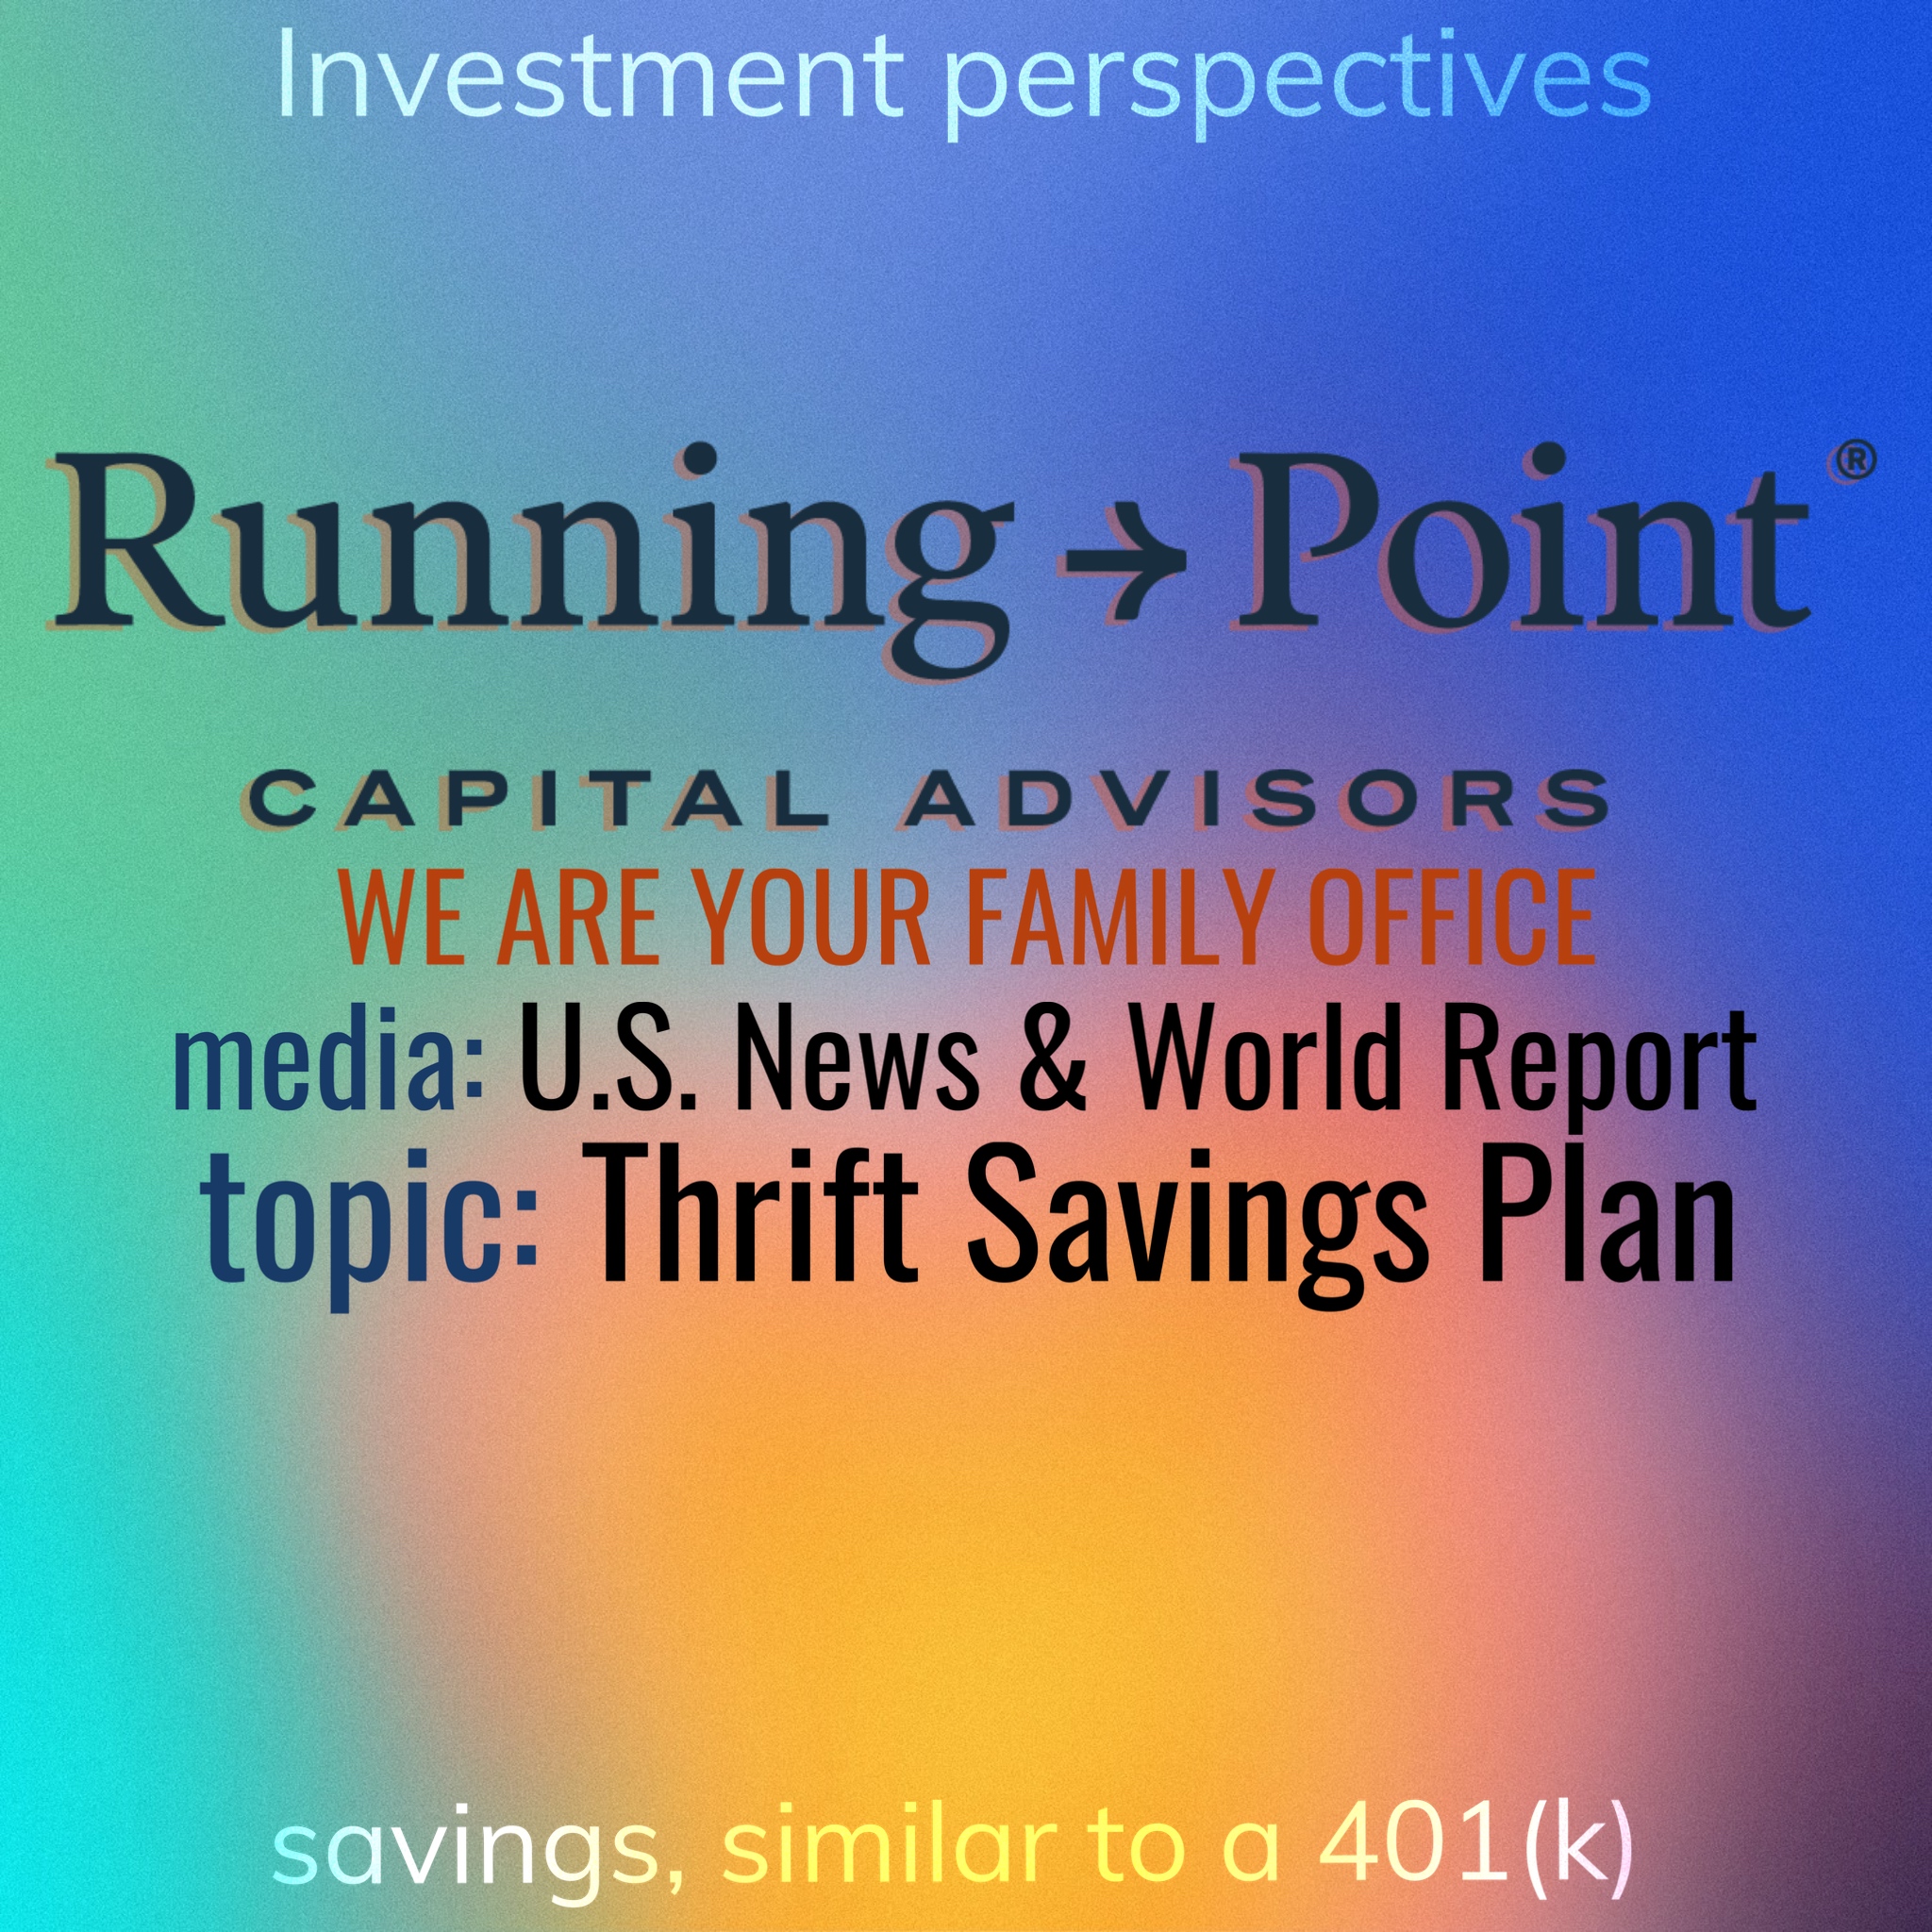 U.S. News & World Report: Thrift Savings Plan (TSP)